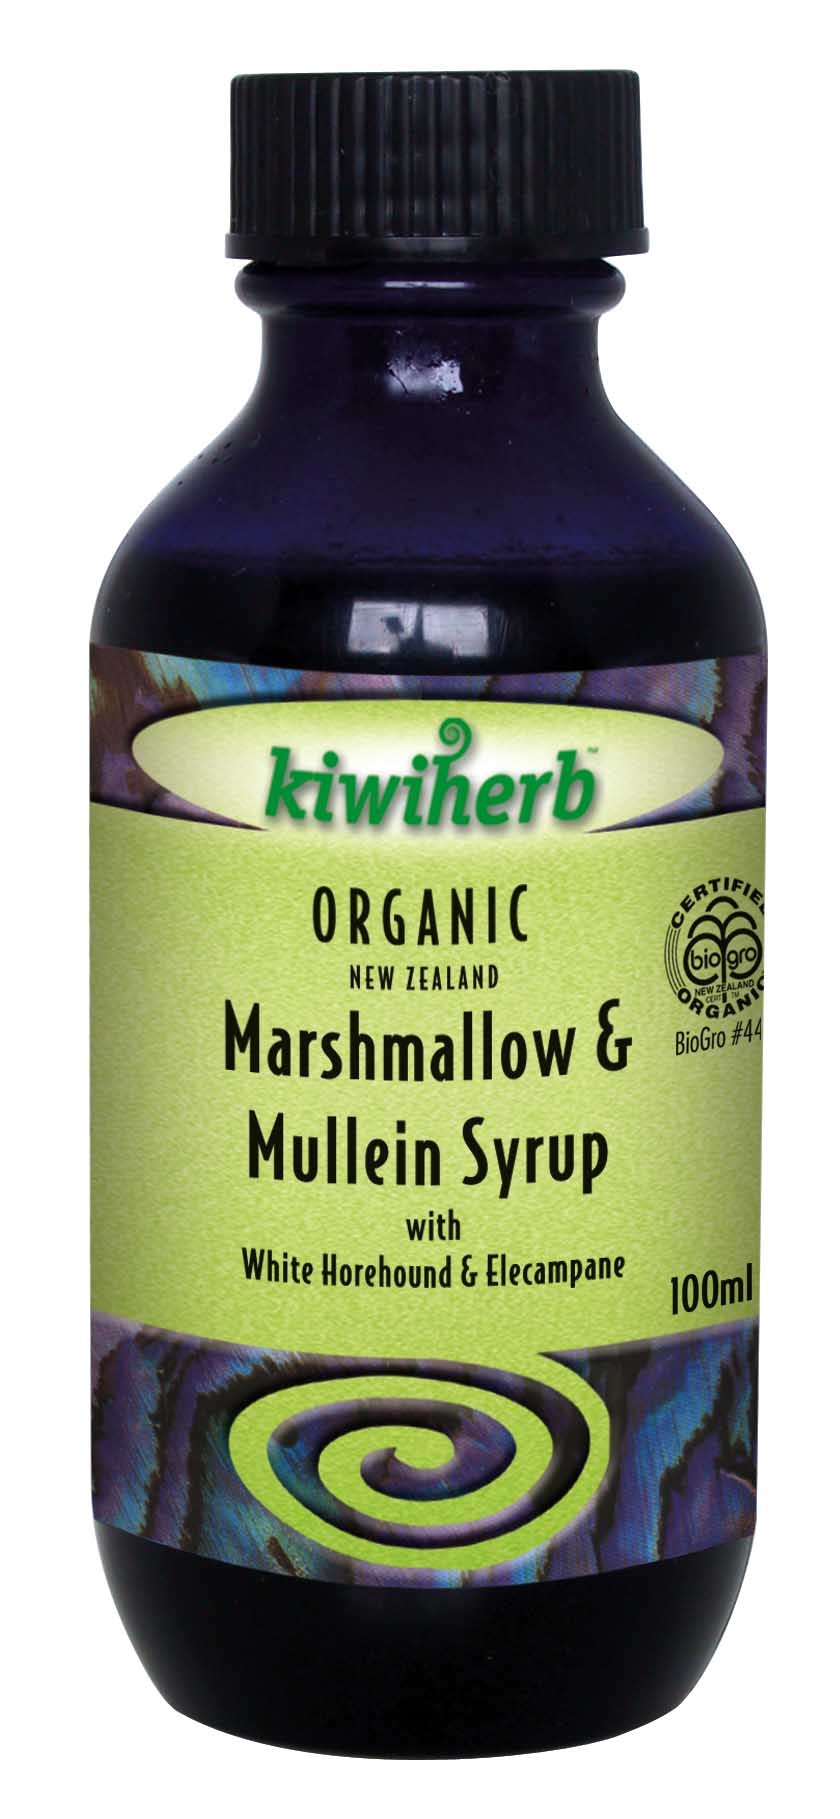 Kiwiherb Marshmallow & Mullein syrup